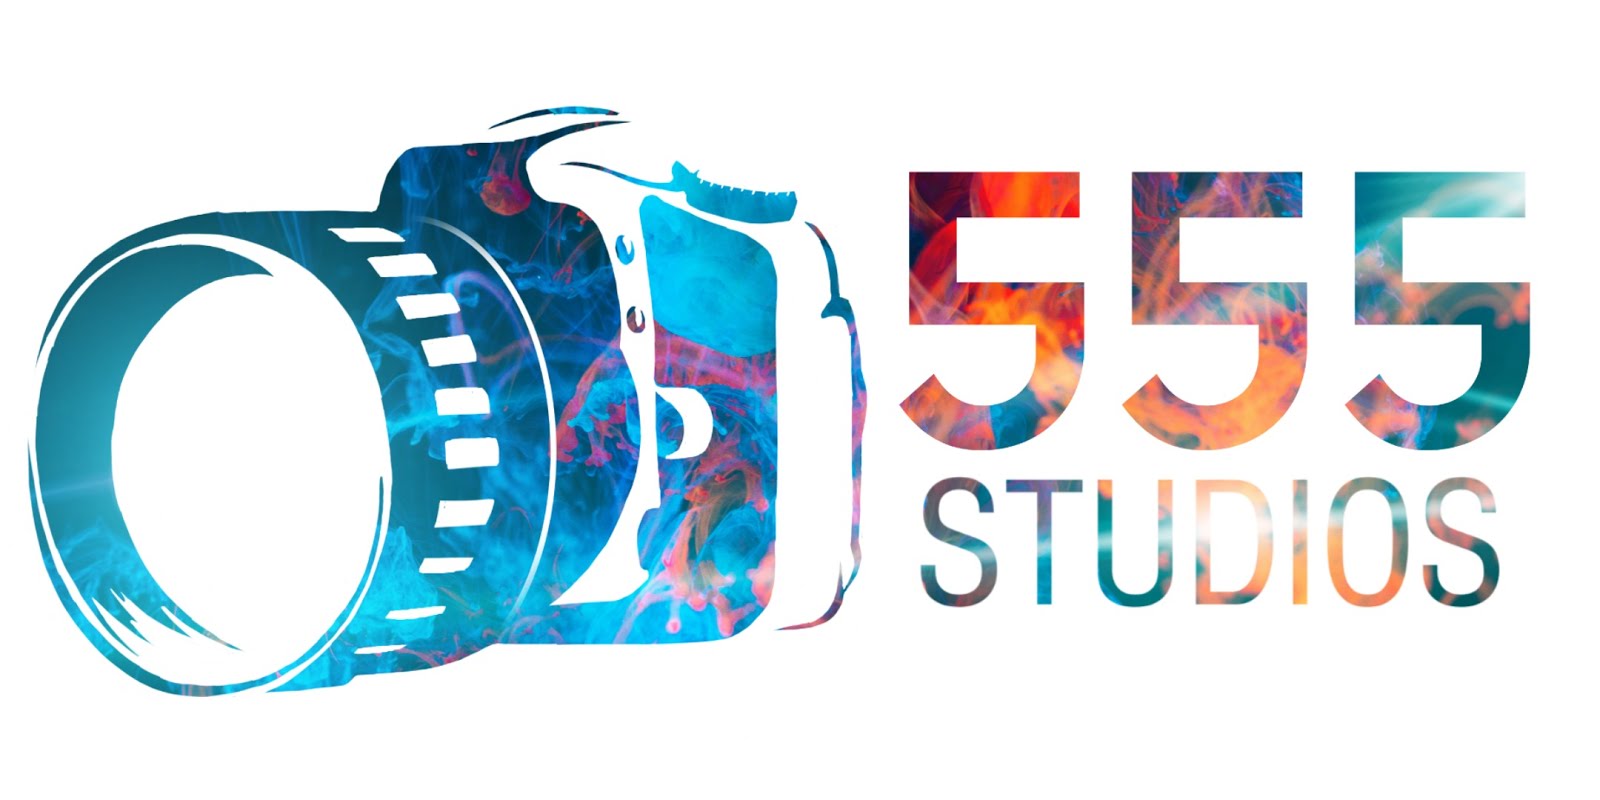 555 STUDIOS